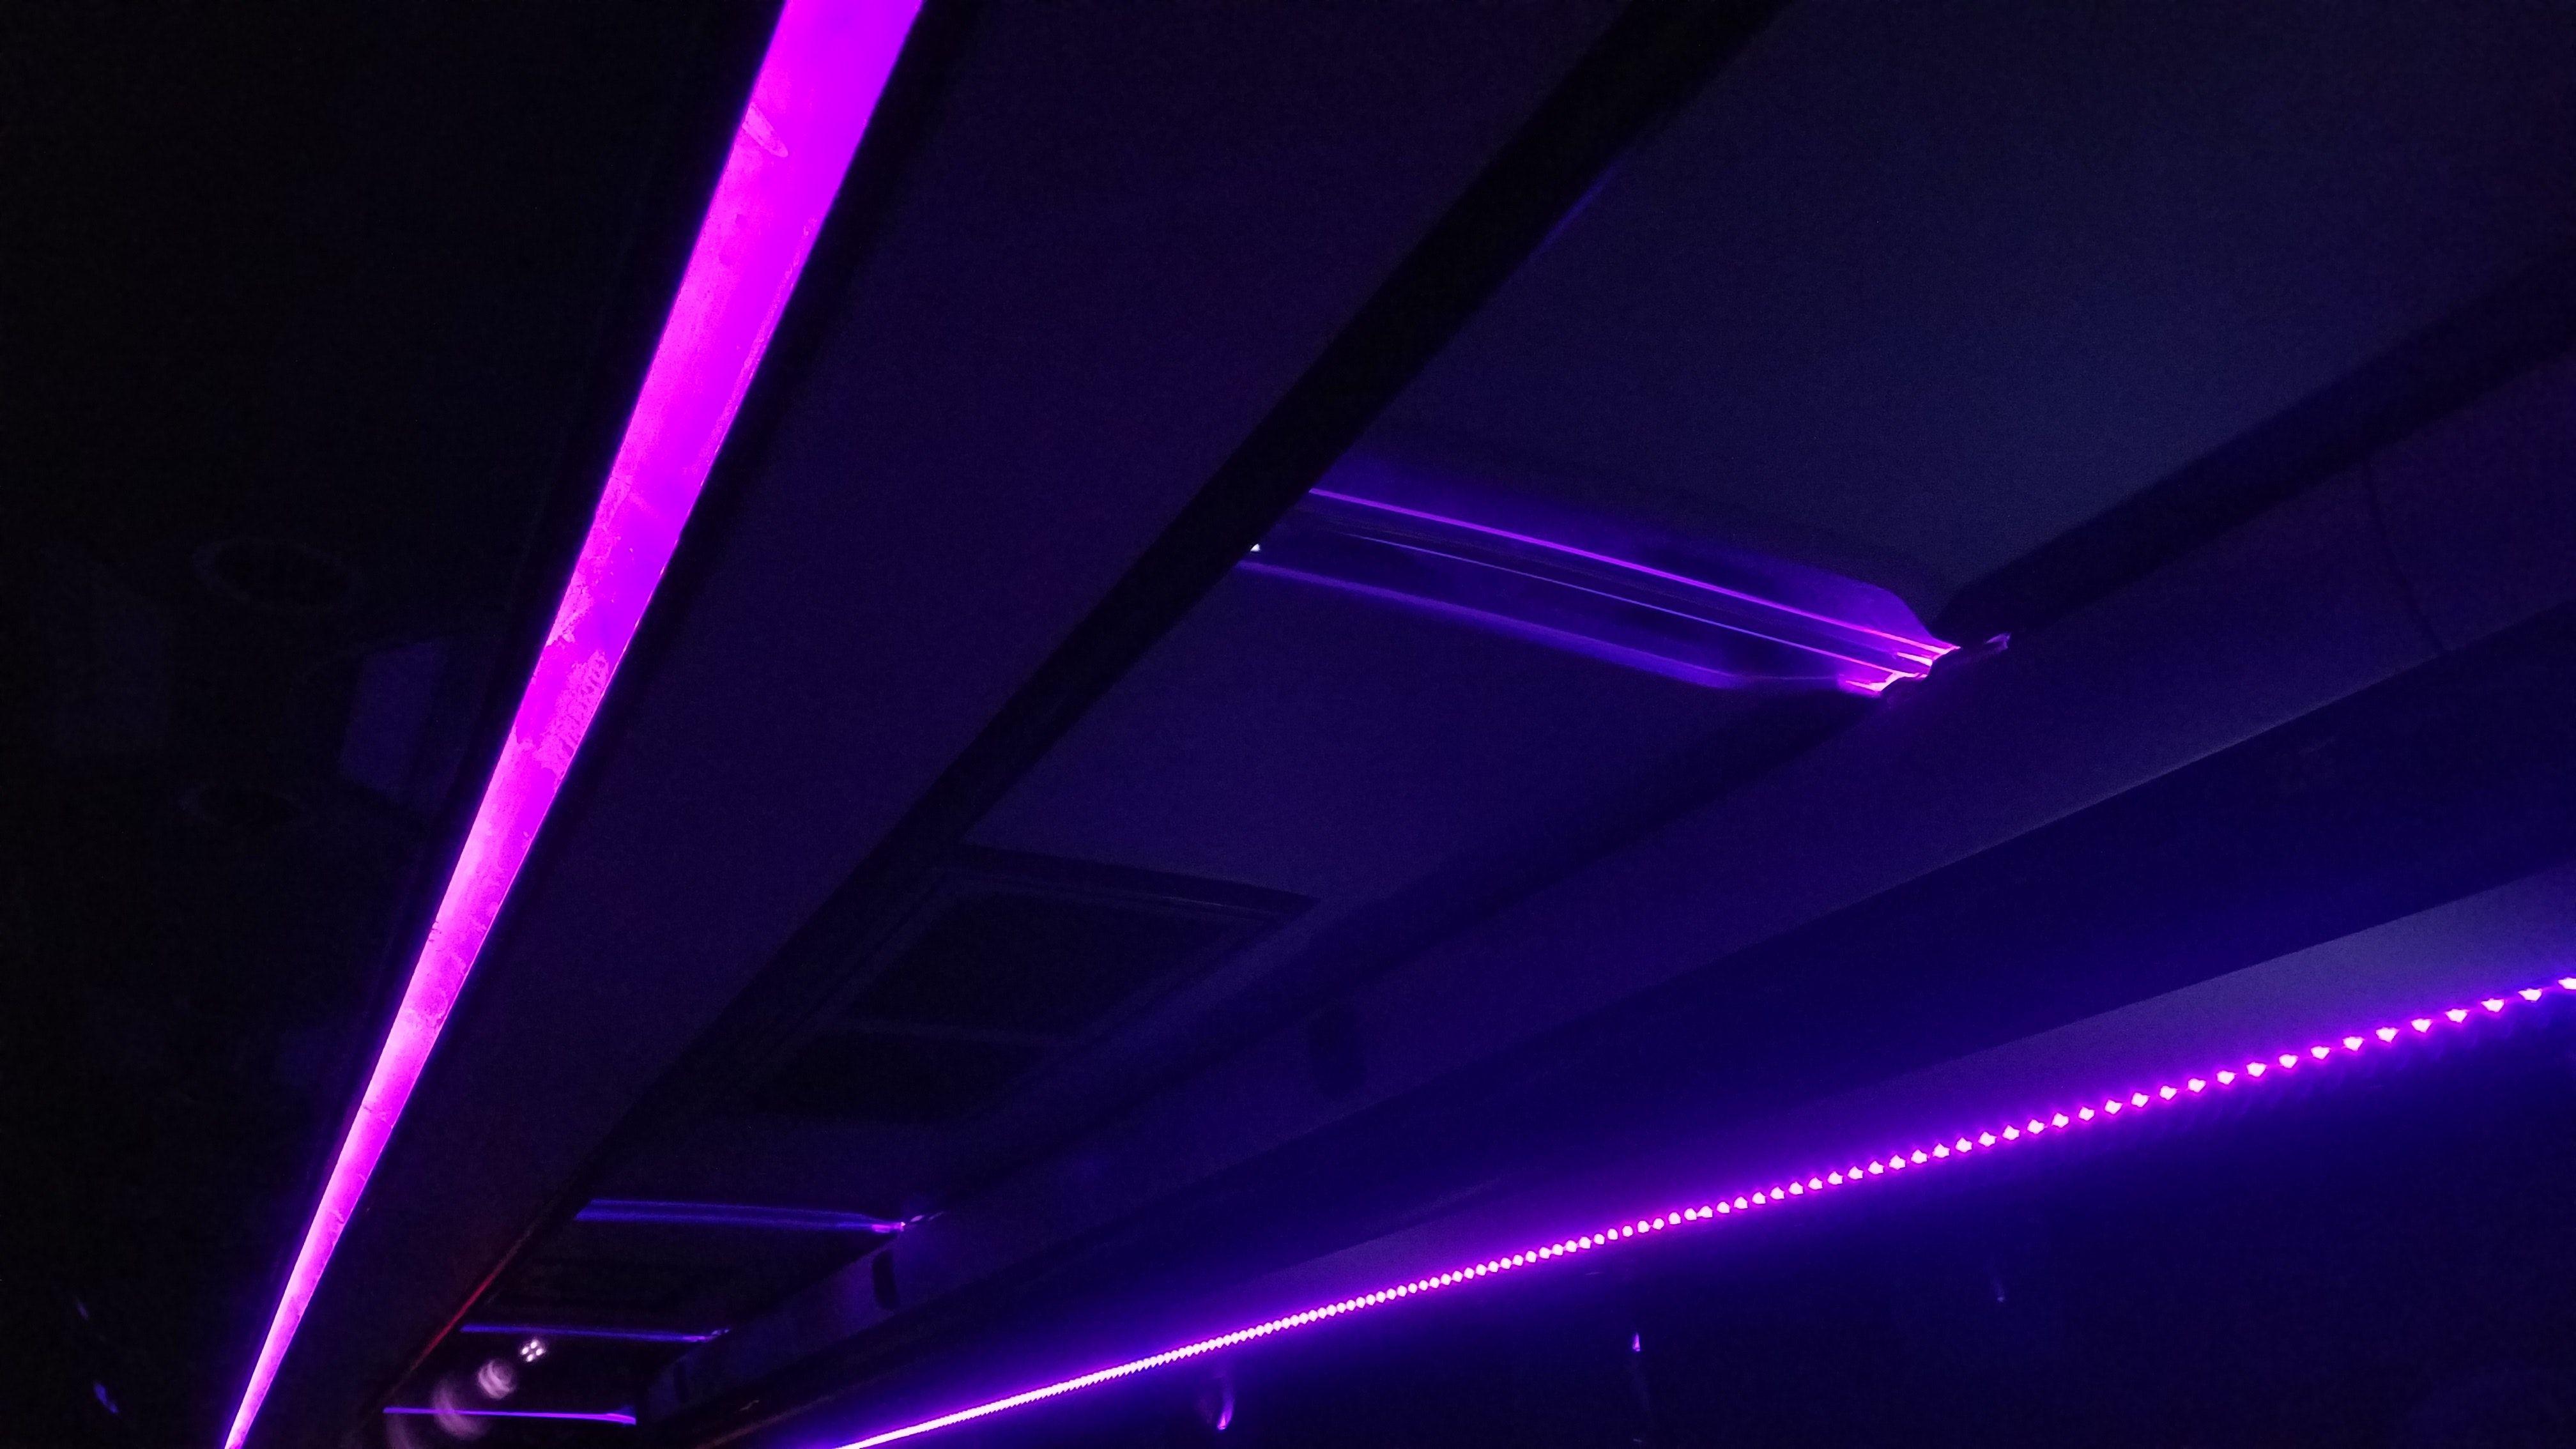 Neon Purple 4K Wallpapers - Top Free Neon Purple 4K ...